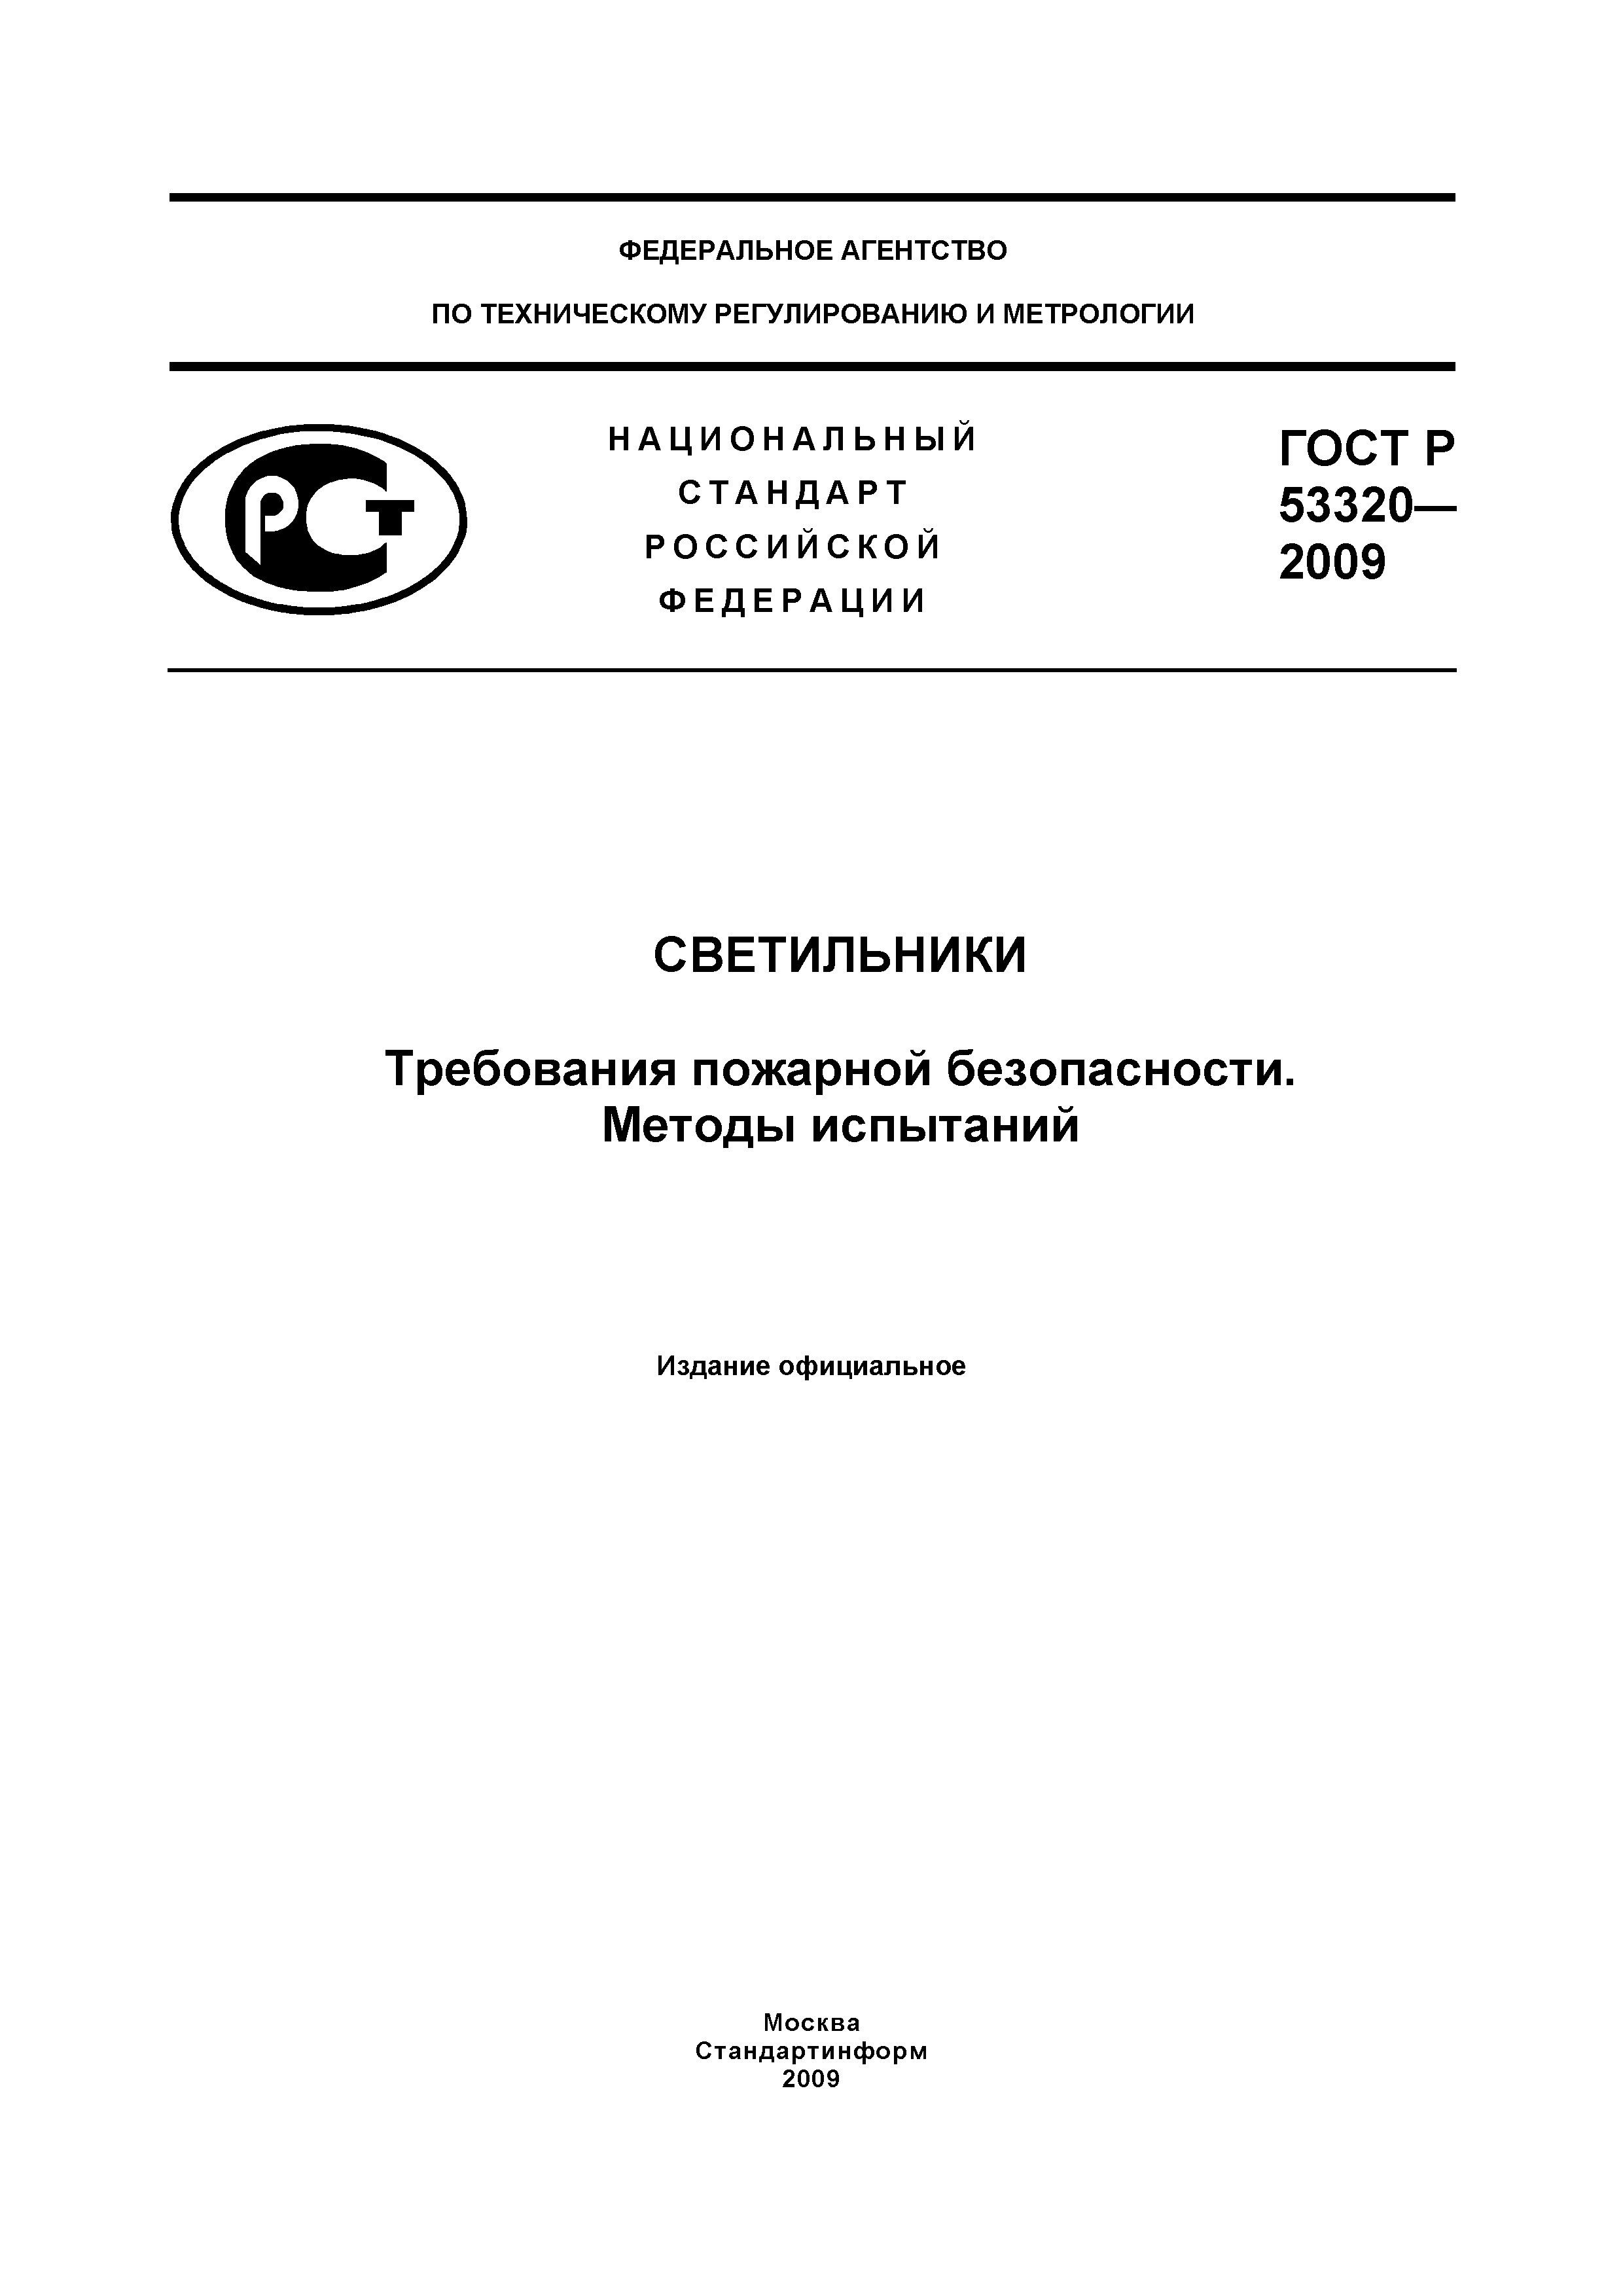 ГОСТ Р 53320-2009